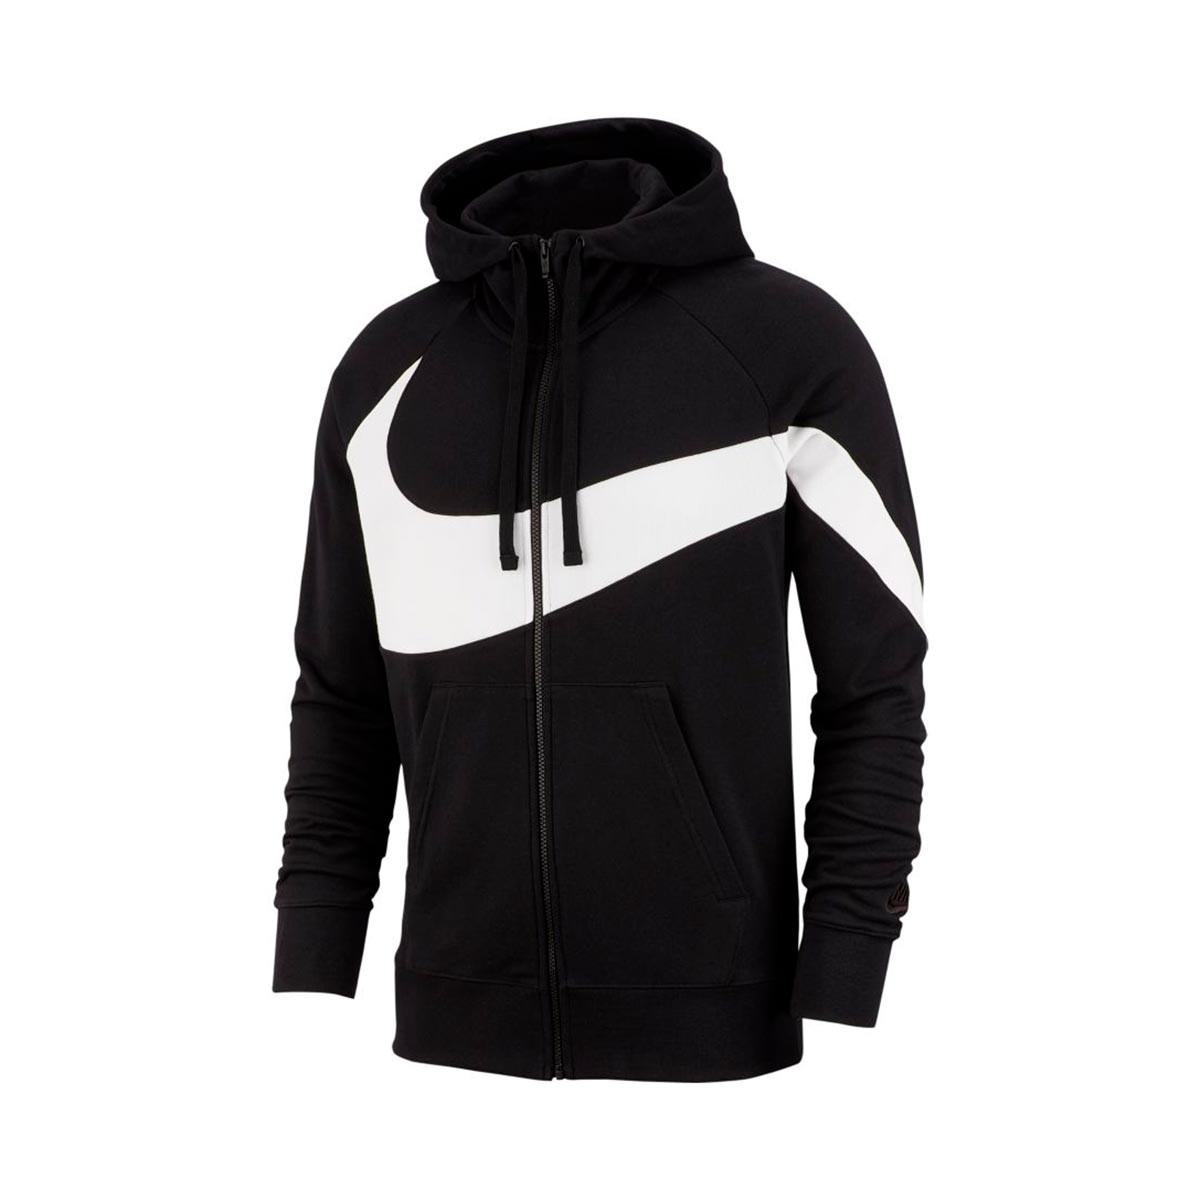 Jacket Nike Sportswear 2019 Black-White-Black - Football store 